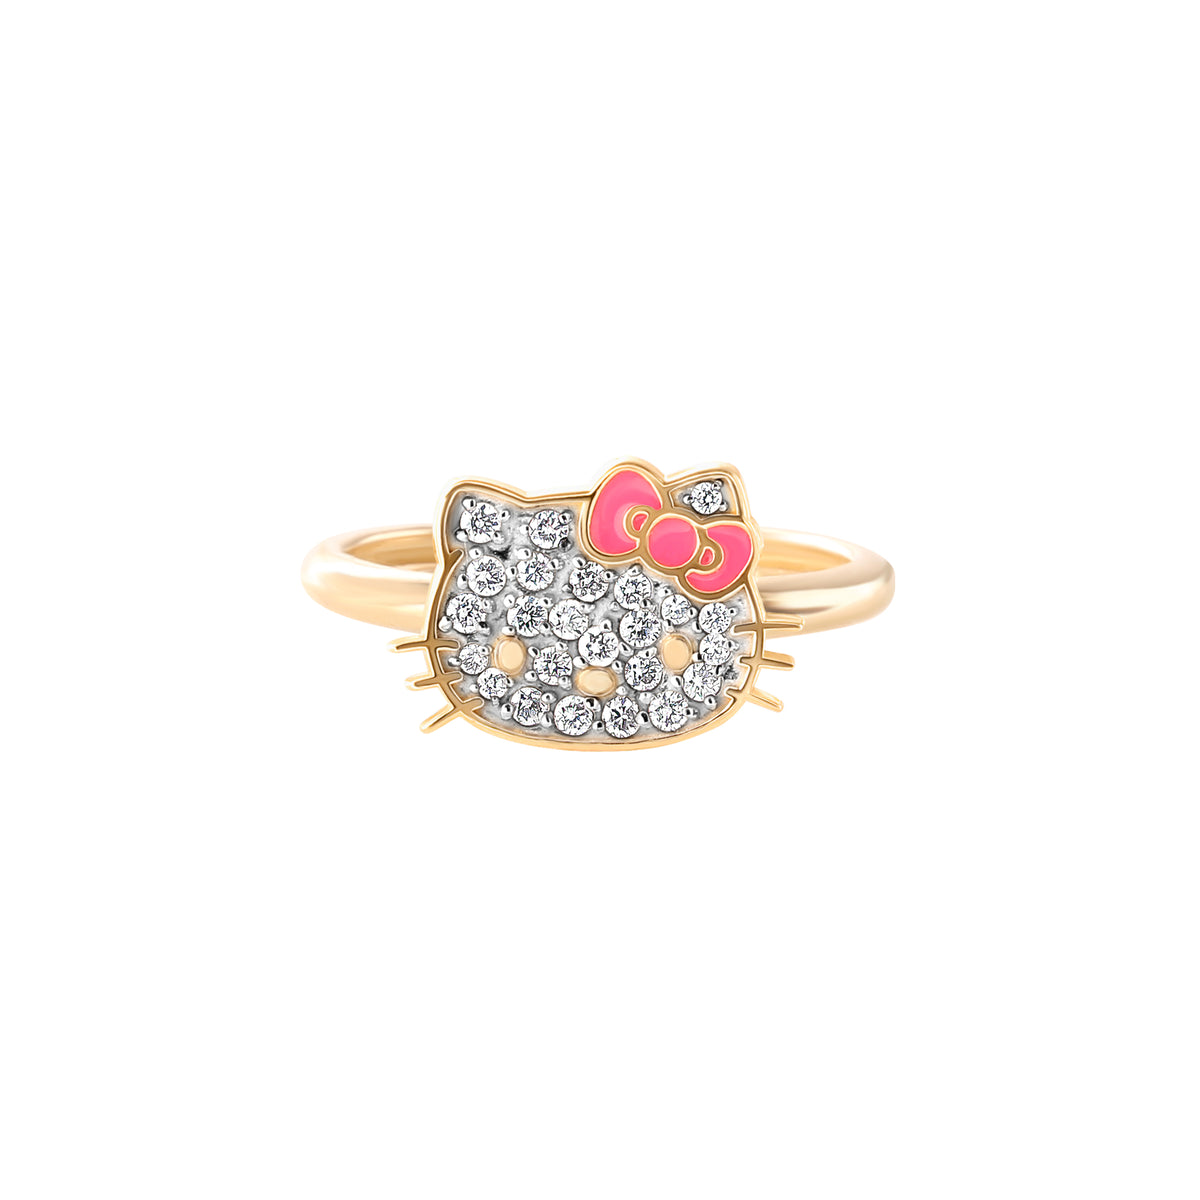 Hello Kitty 14K Yellow Gold Pavé Diamond Ring With Enamel Bow (Size 7 Only) Jewelry JACMEL JEWELRY INC   